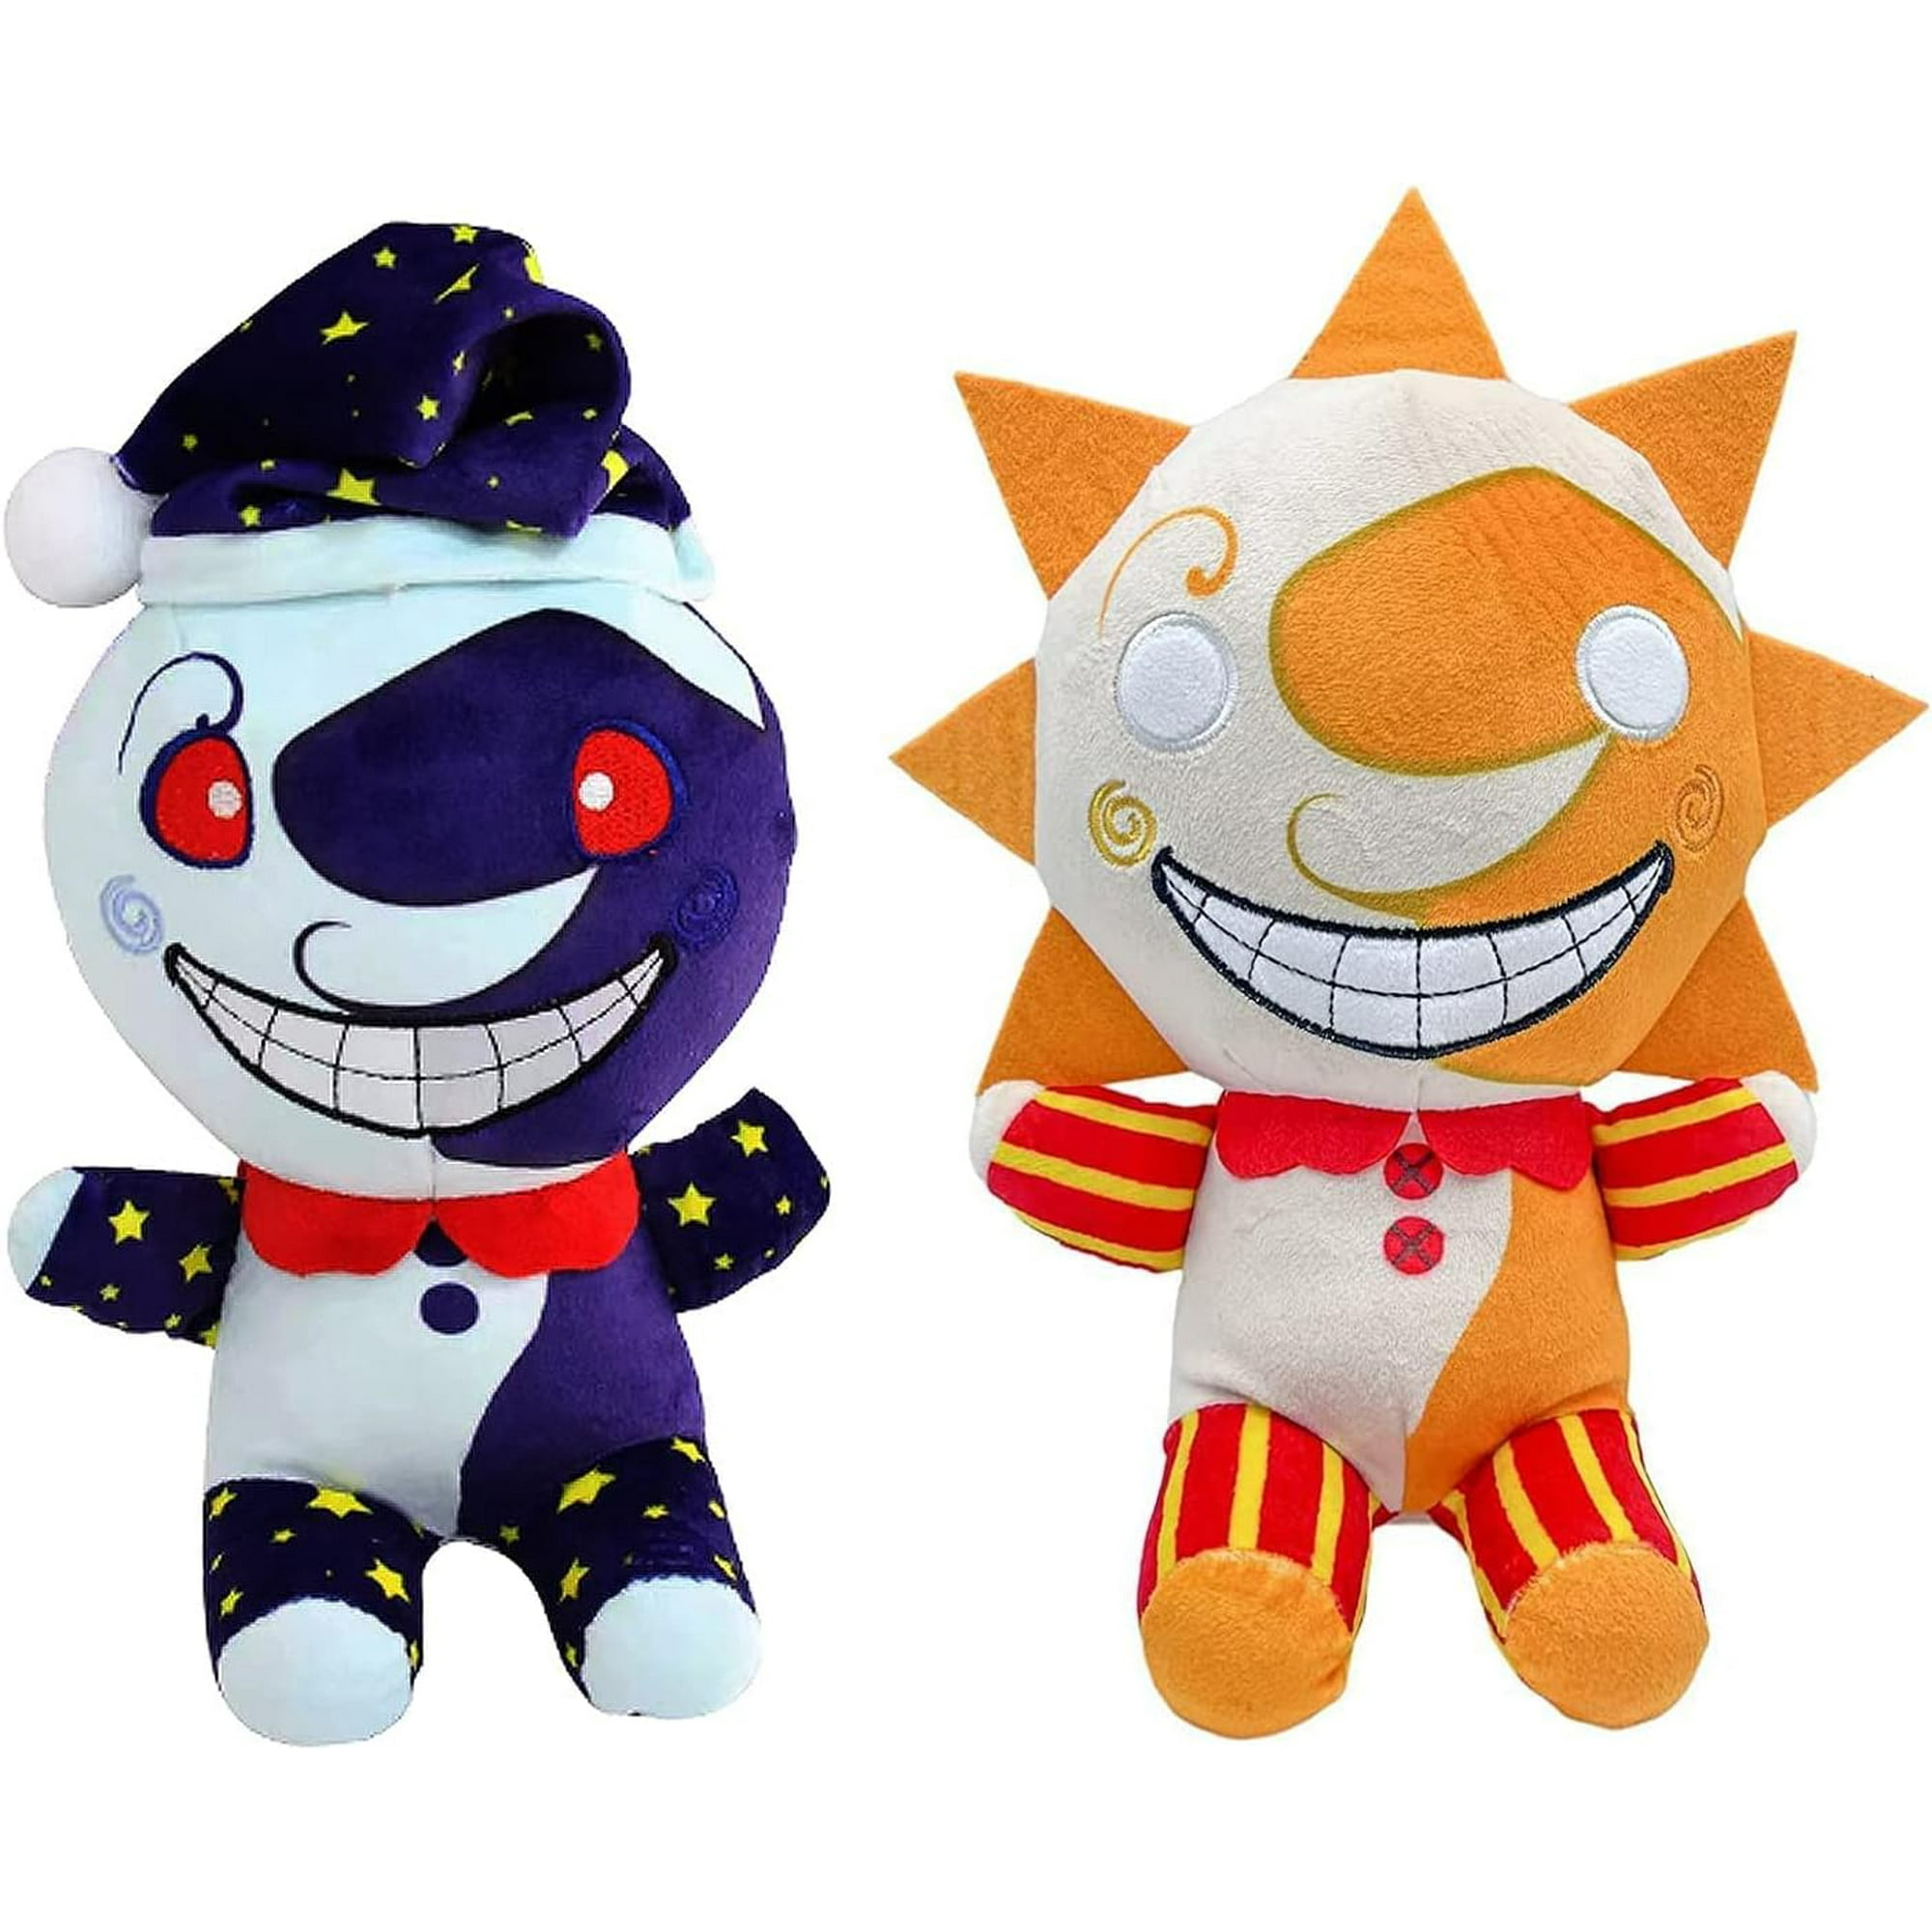 Sundrop and moondrop plush toy, sun and moon stuffed animal,clown figure cartoon plush for fans birthday gift (2pcs)